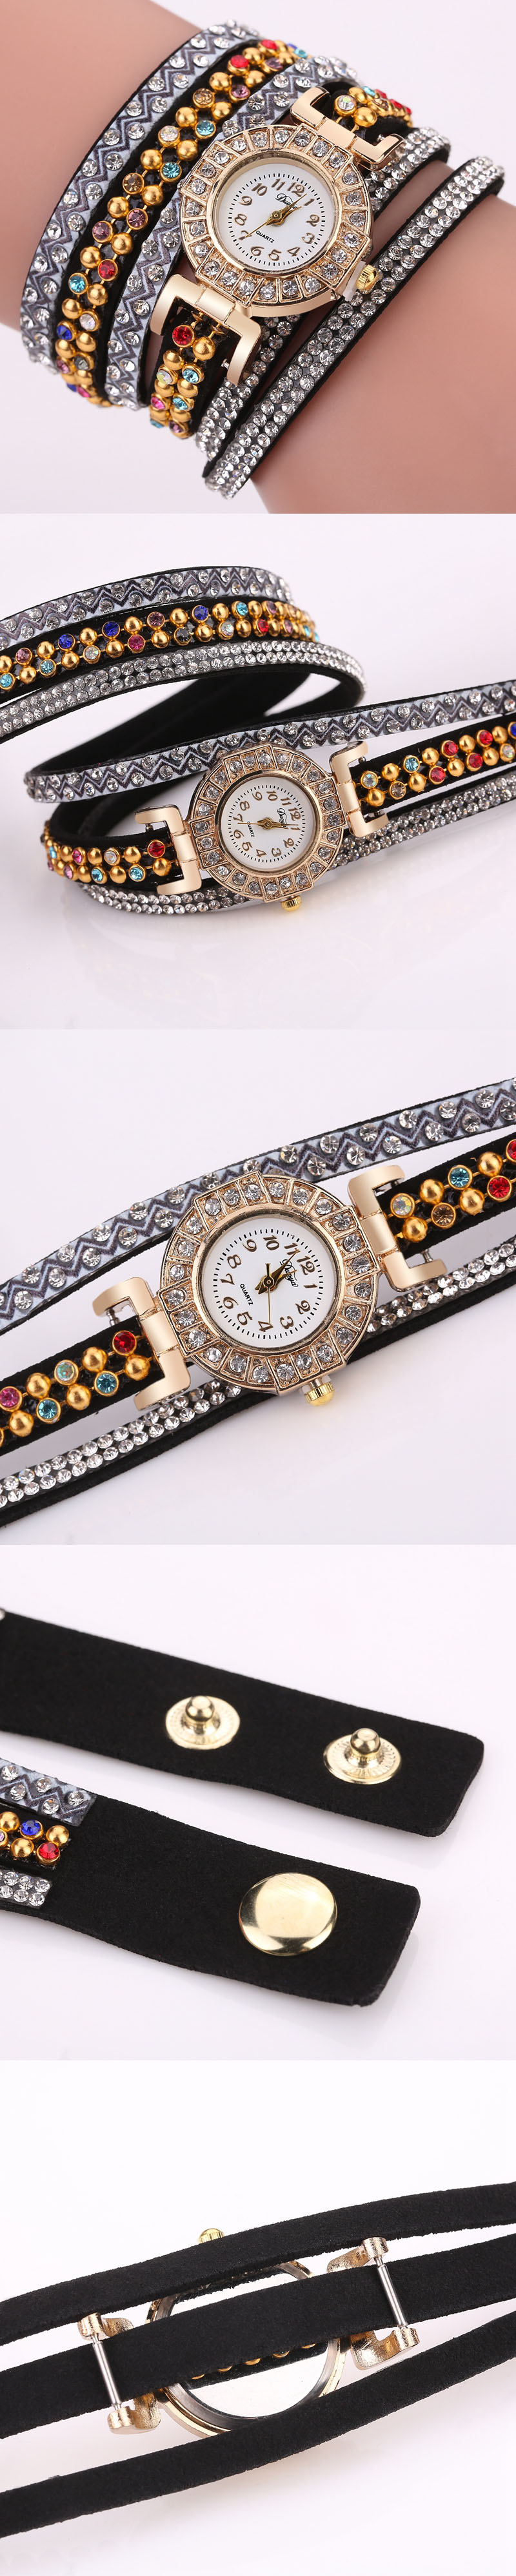 DUOYA-Fine-Leather-Band-Winding-Crystal-Ladies-Bracelet-Watch-Elegant-Women-Analog-Quartz-Watches-1216701